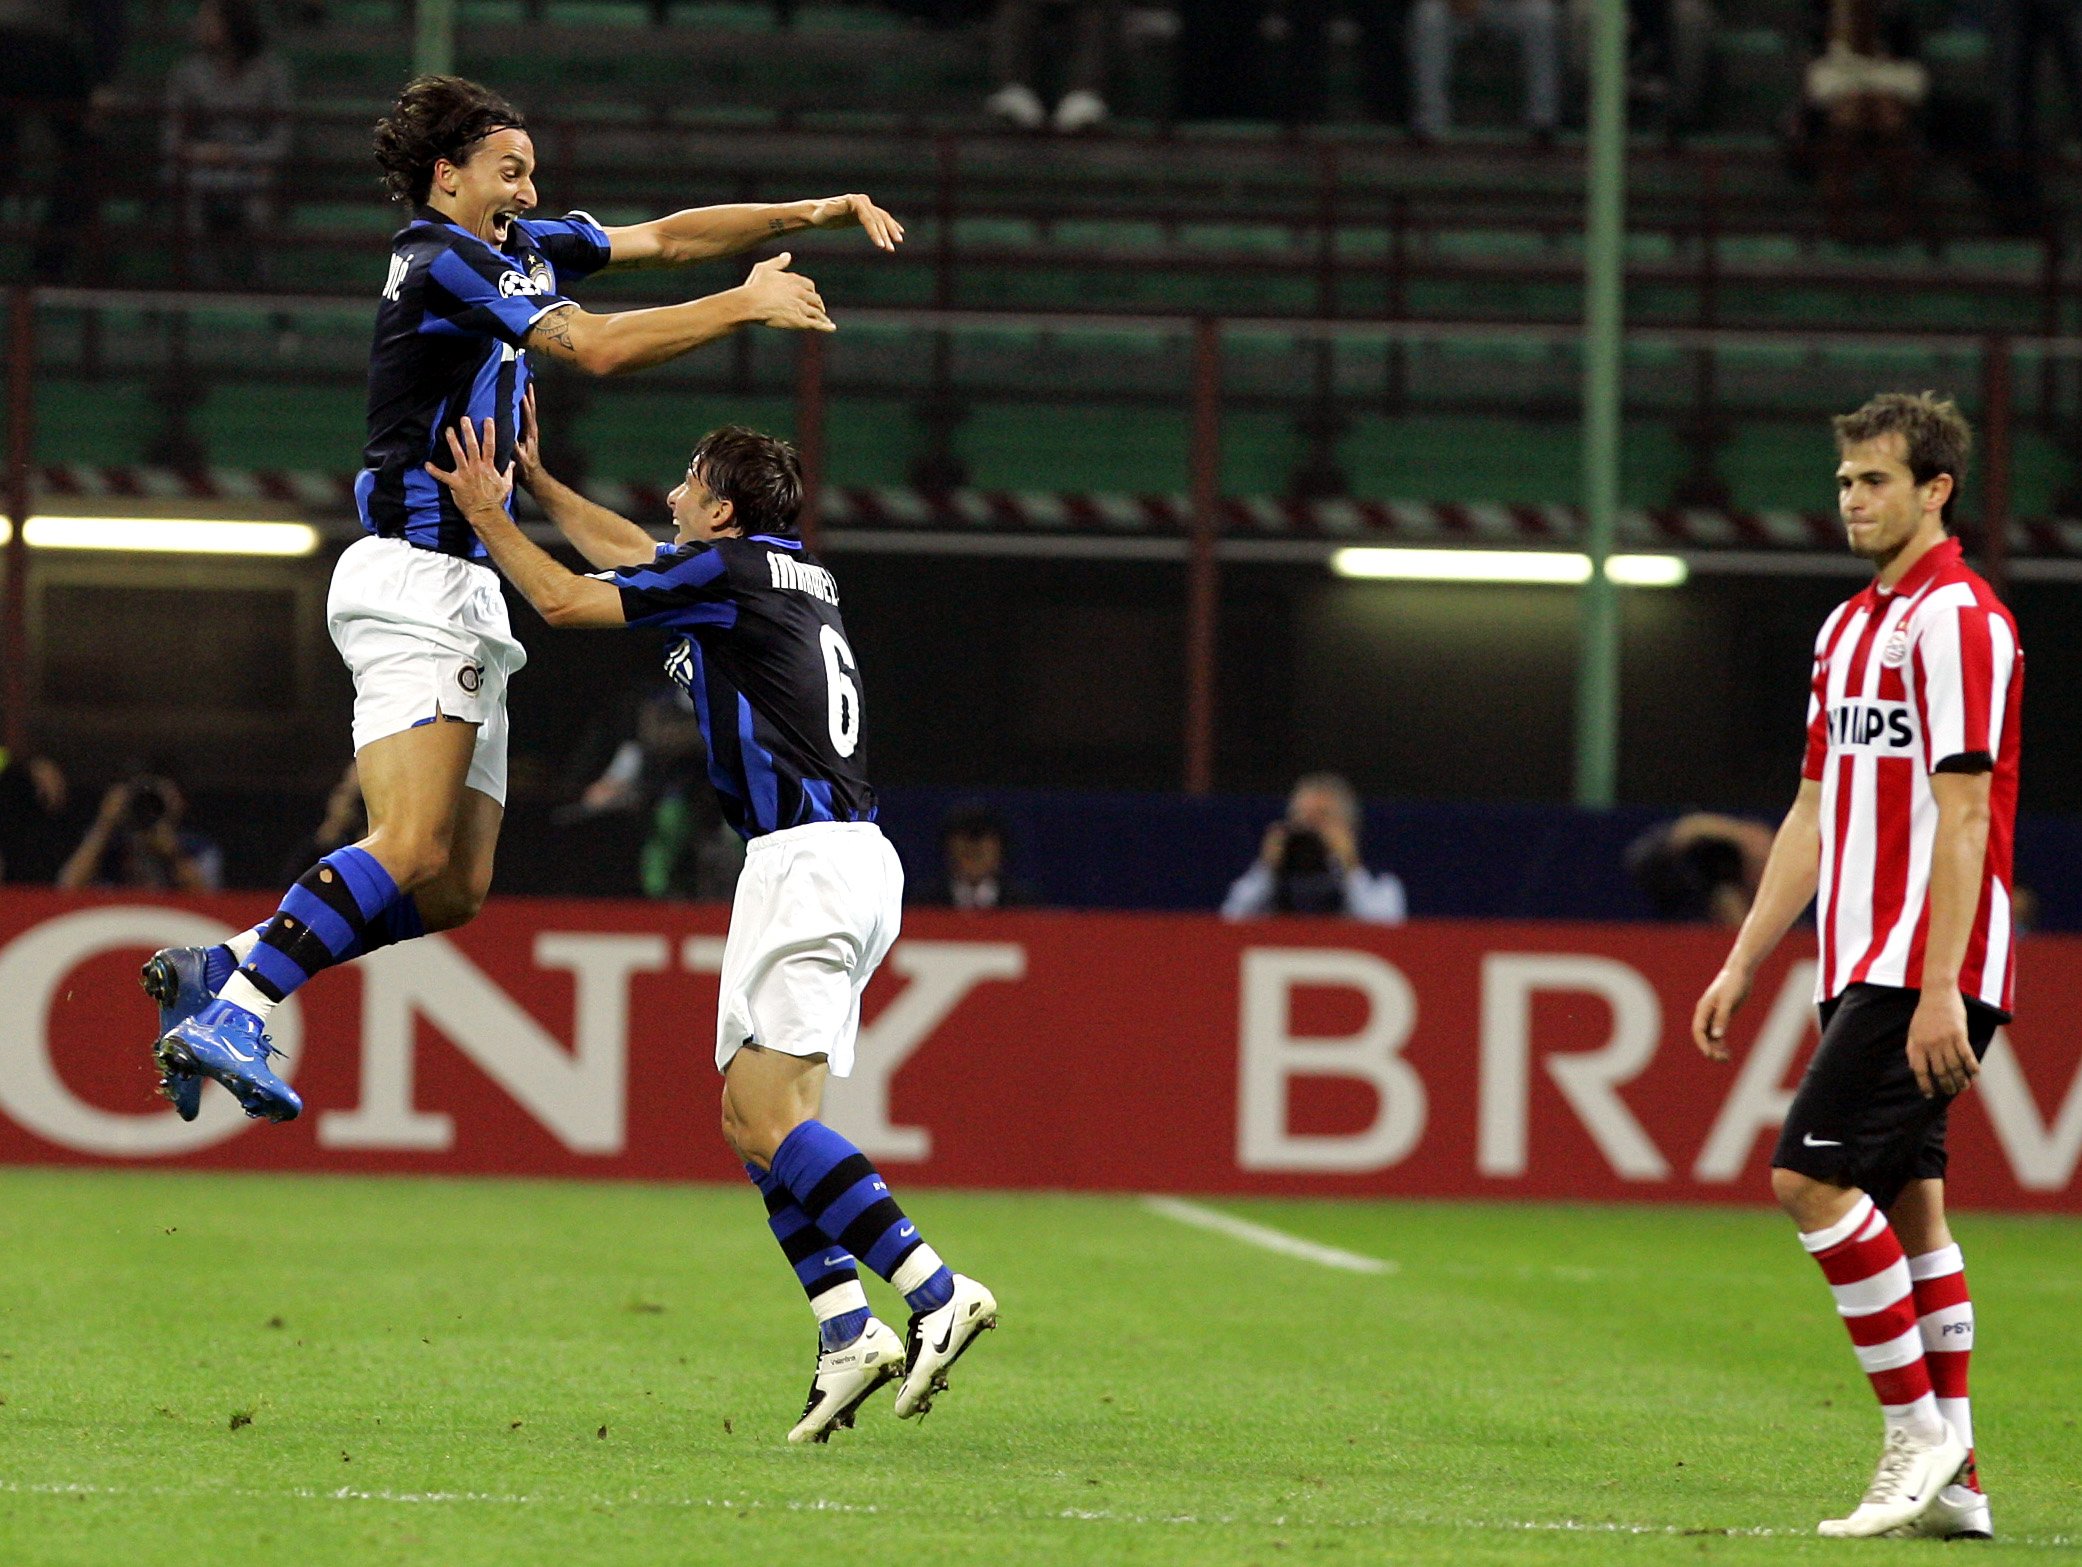 Fotboll, serie a, milan, Zlatan Ibrahimovic, PSG, Italien